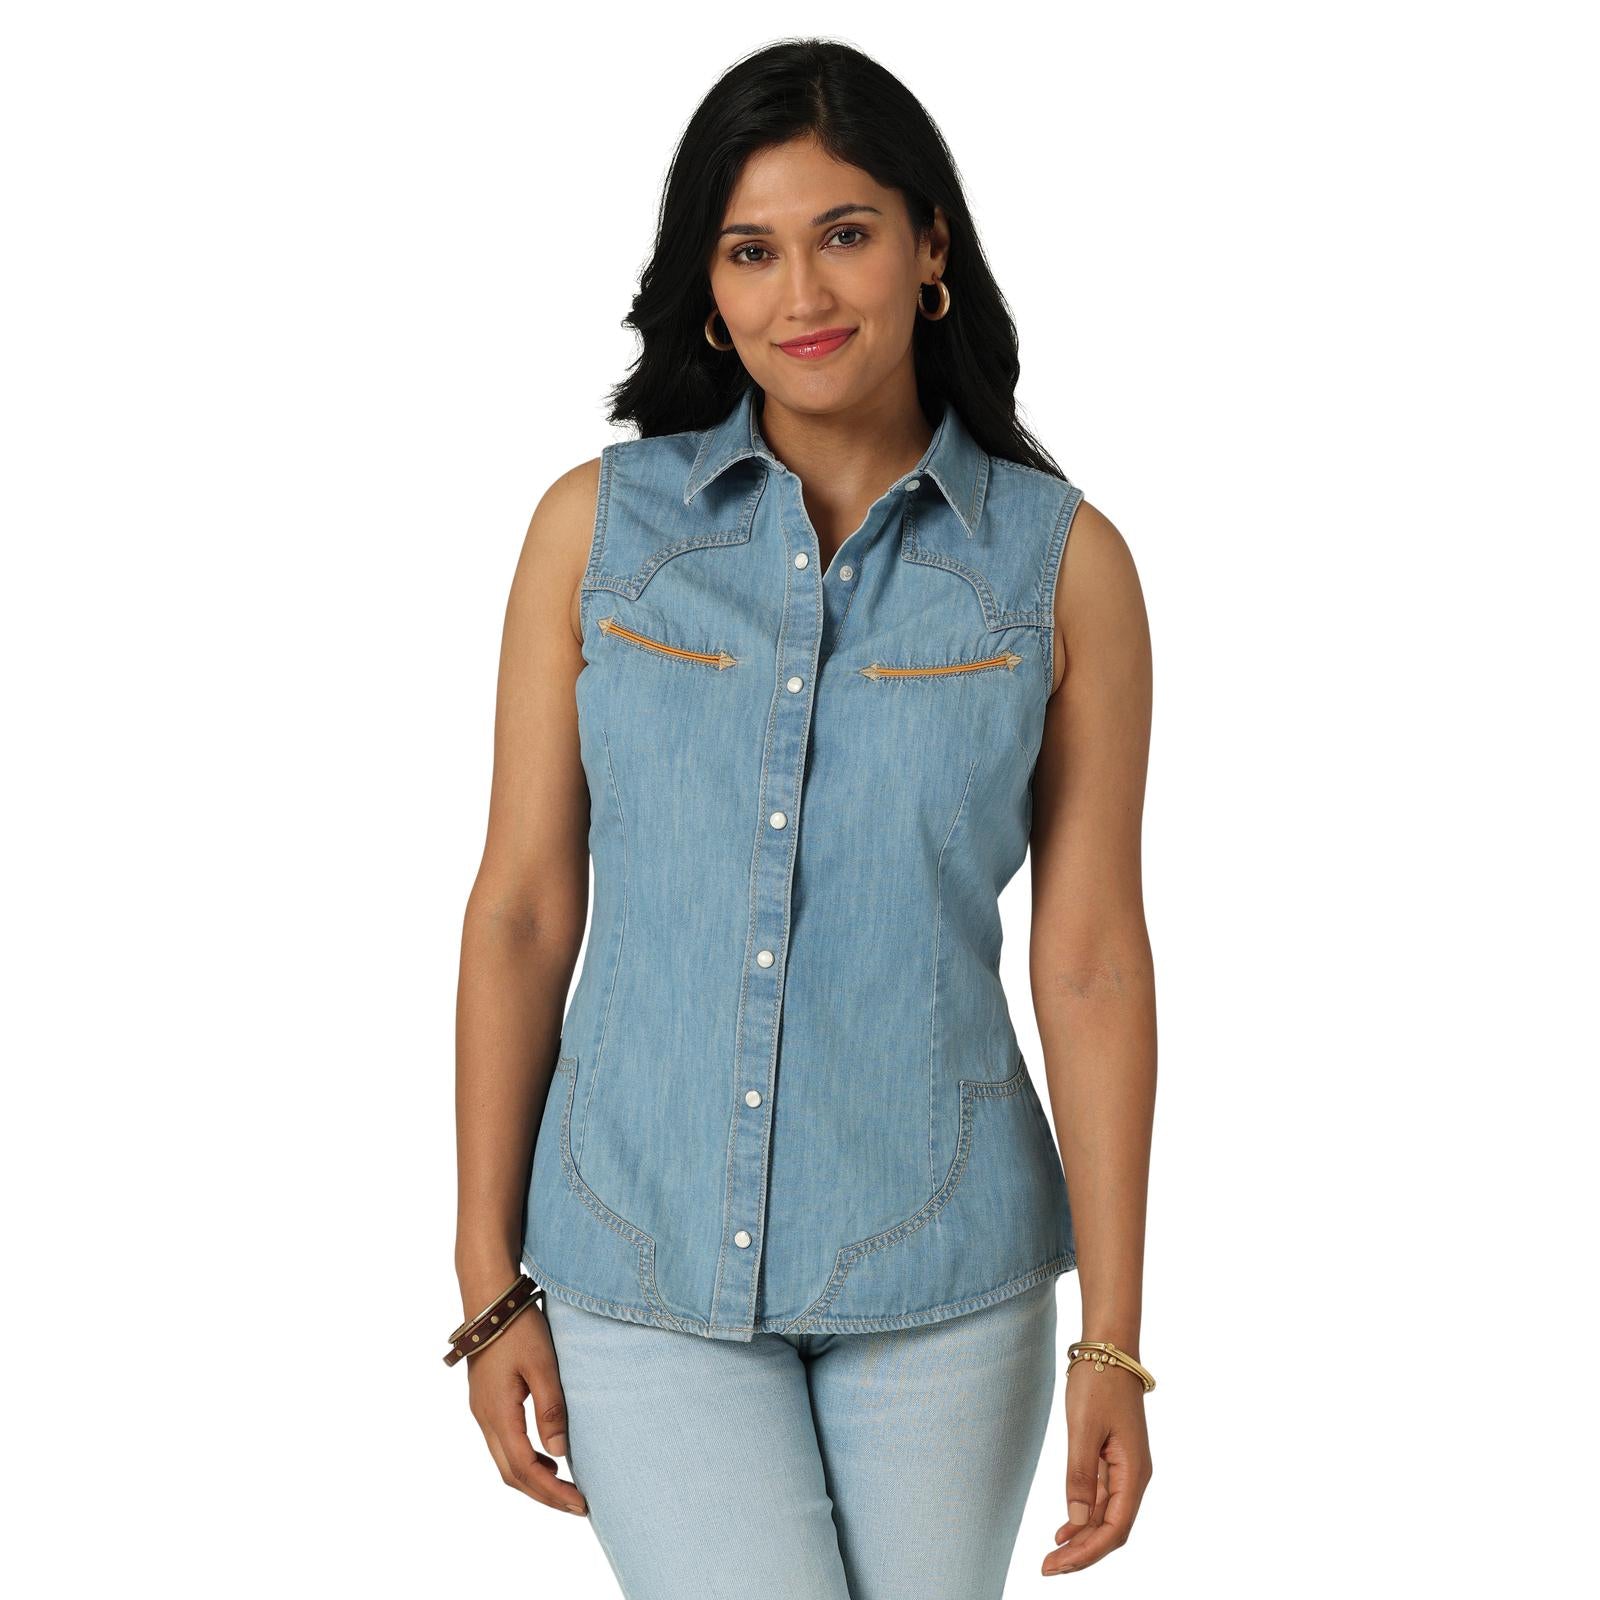 Buy RC Fashion Denim Double Pocket Shirt for Women & Girls at Amazon.in